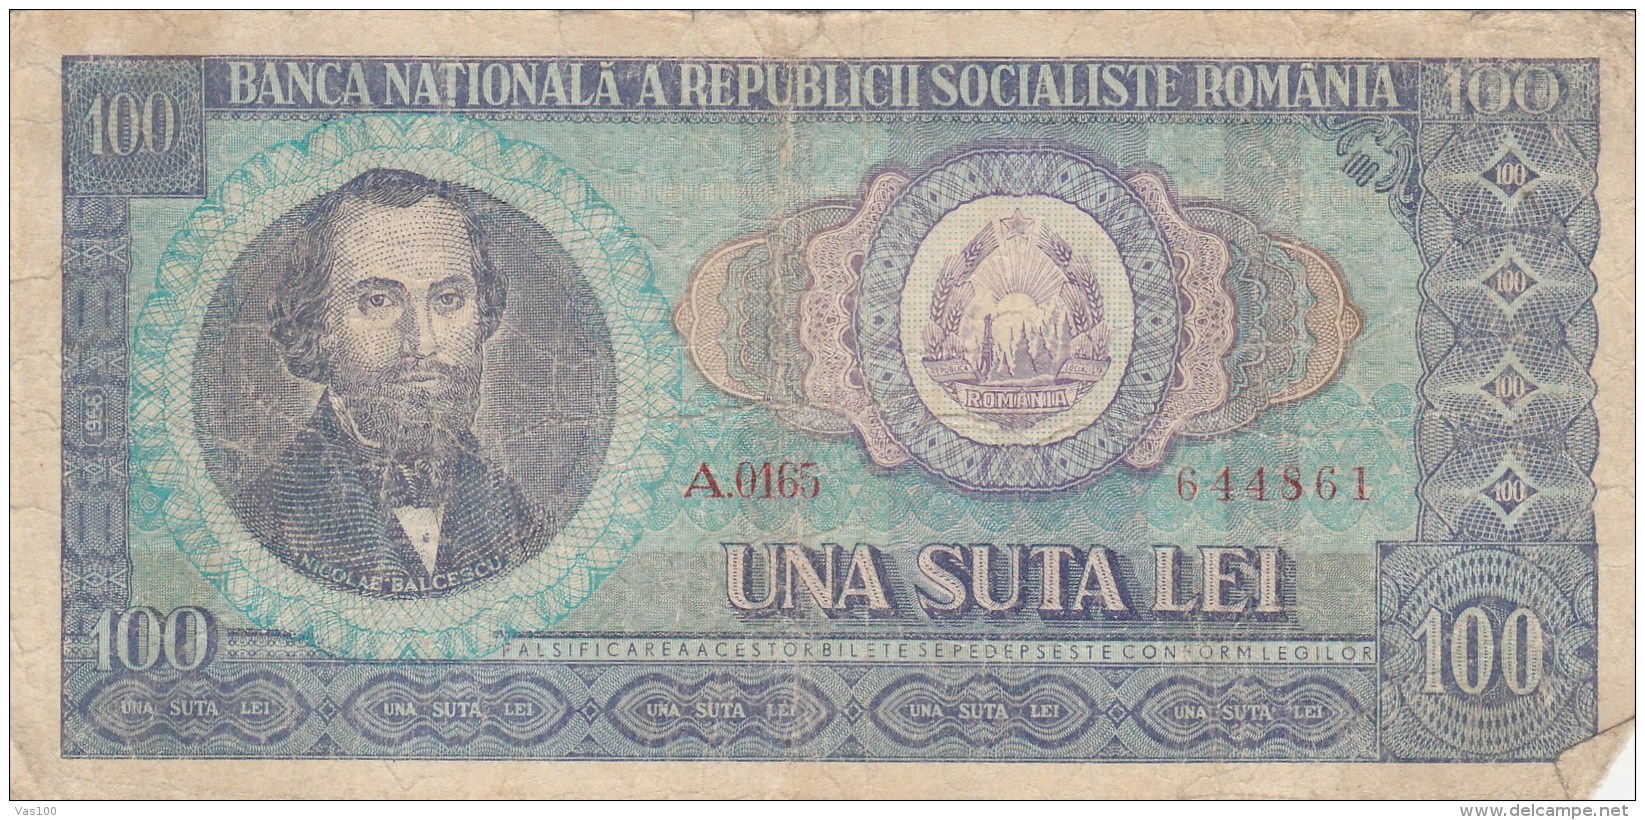 100 LEI, NICOLAE BALCESCU, SOCIALIST REPUBLIC OF ROMANIA,1966,ROMANIA. - Roumanie